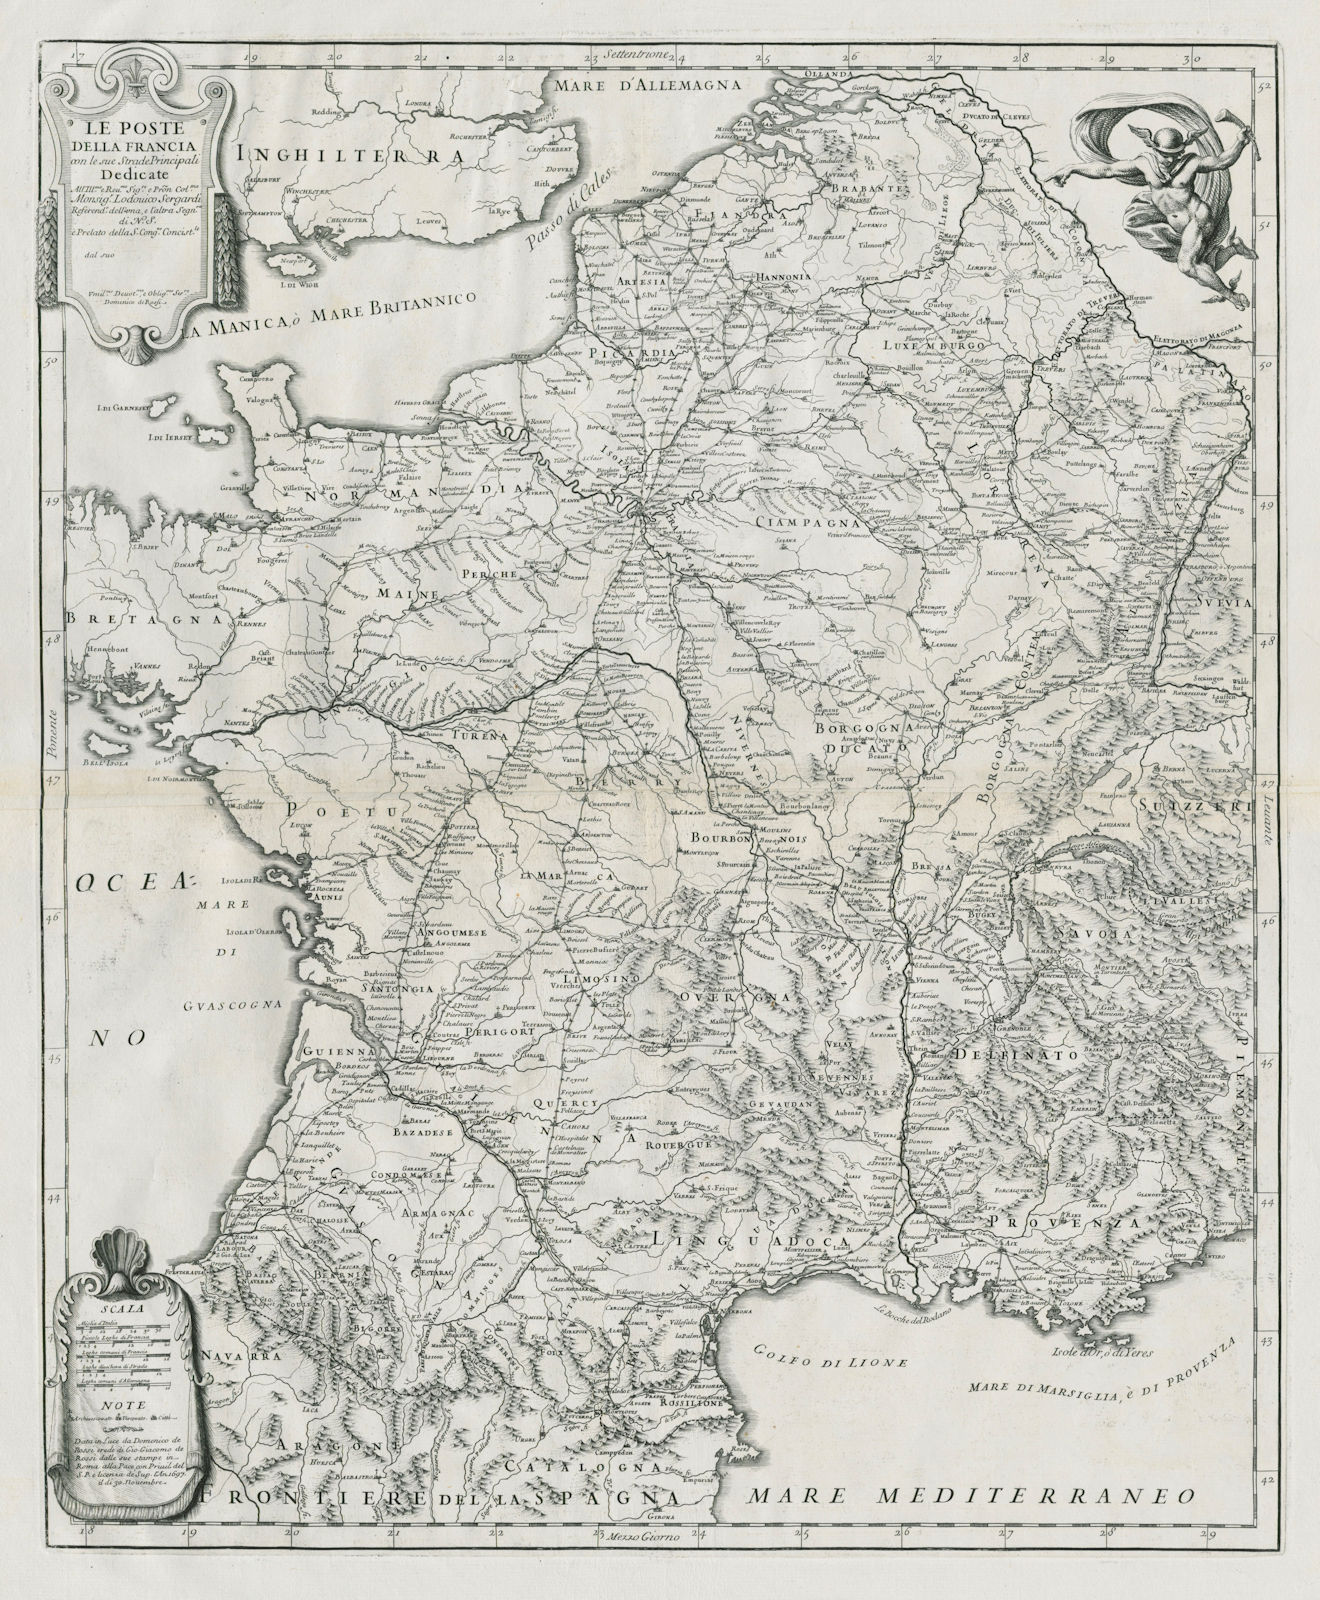 Associate Product Le Poste della Francia. The post roads of France. DE ROSSI / SANSON 1697 map